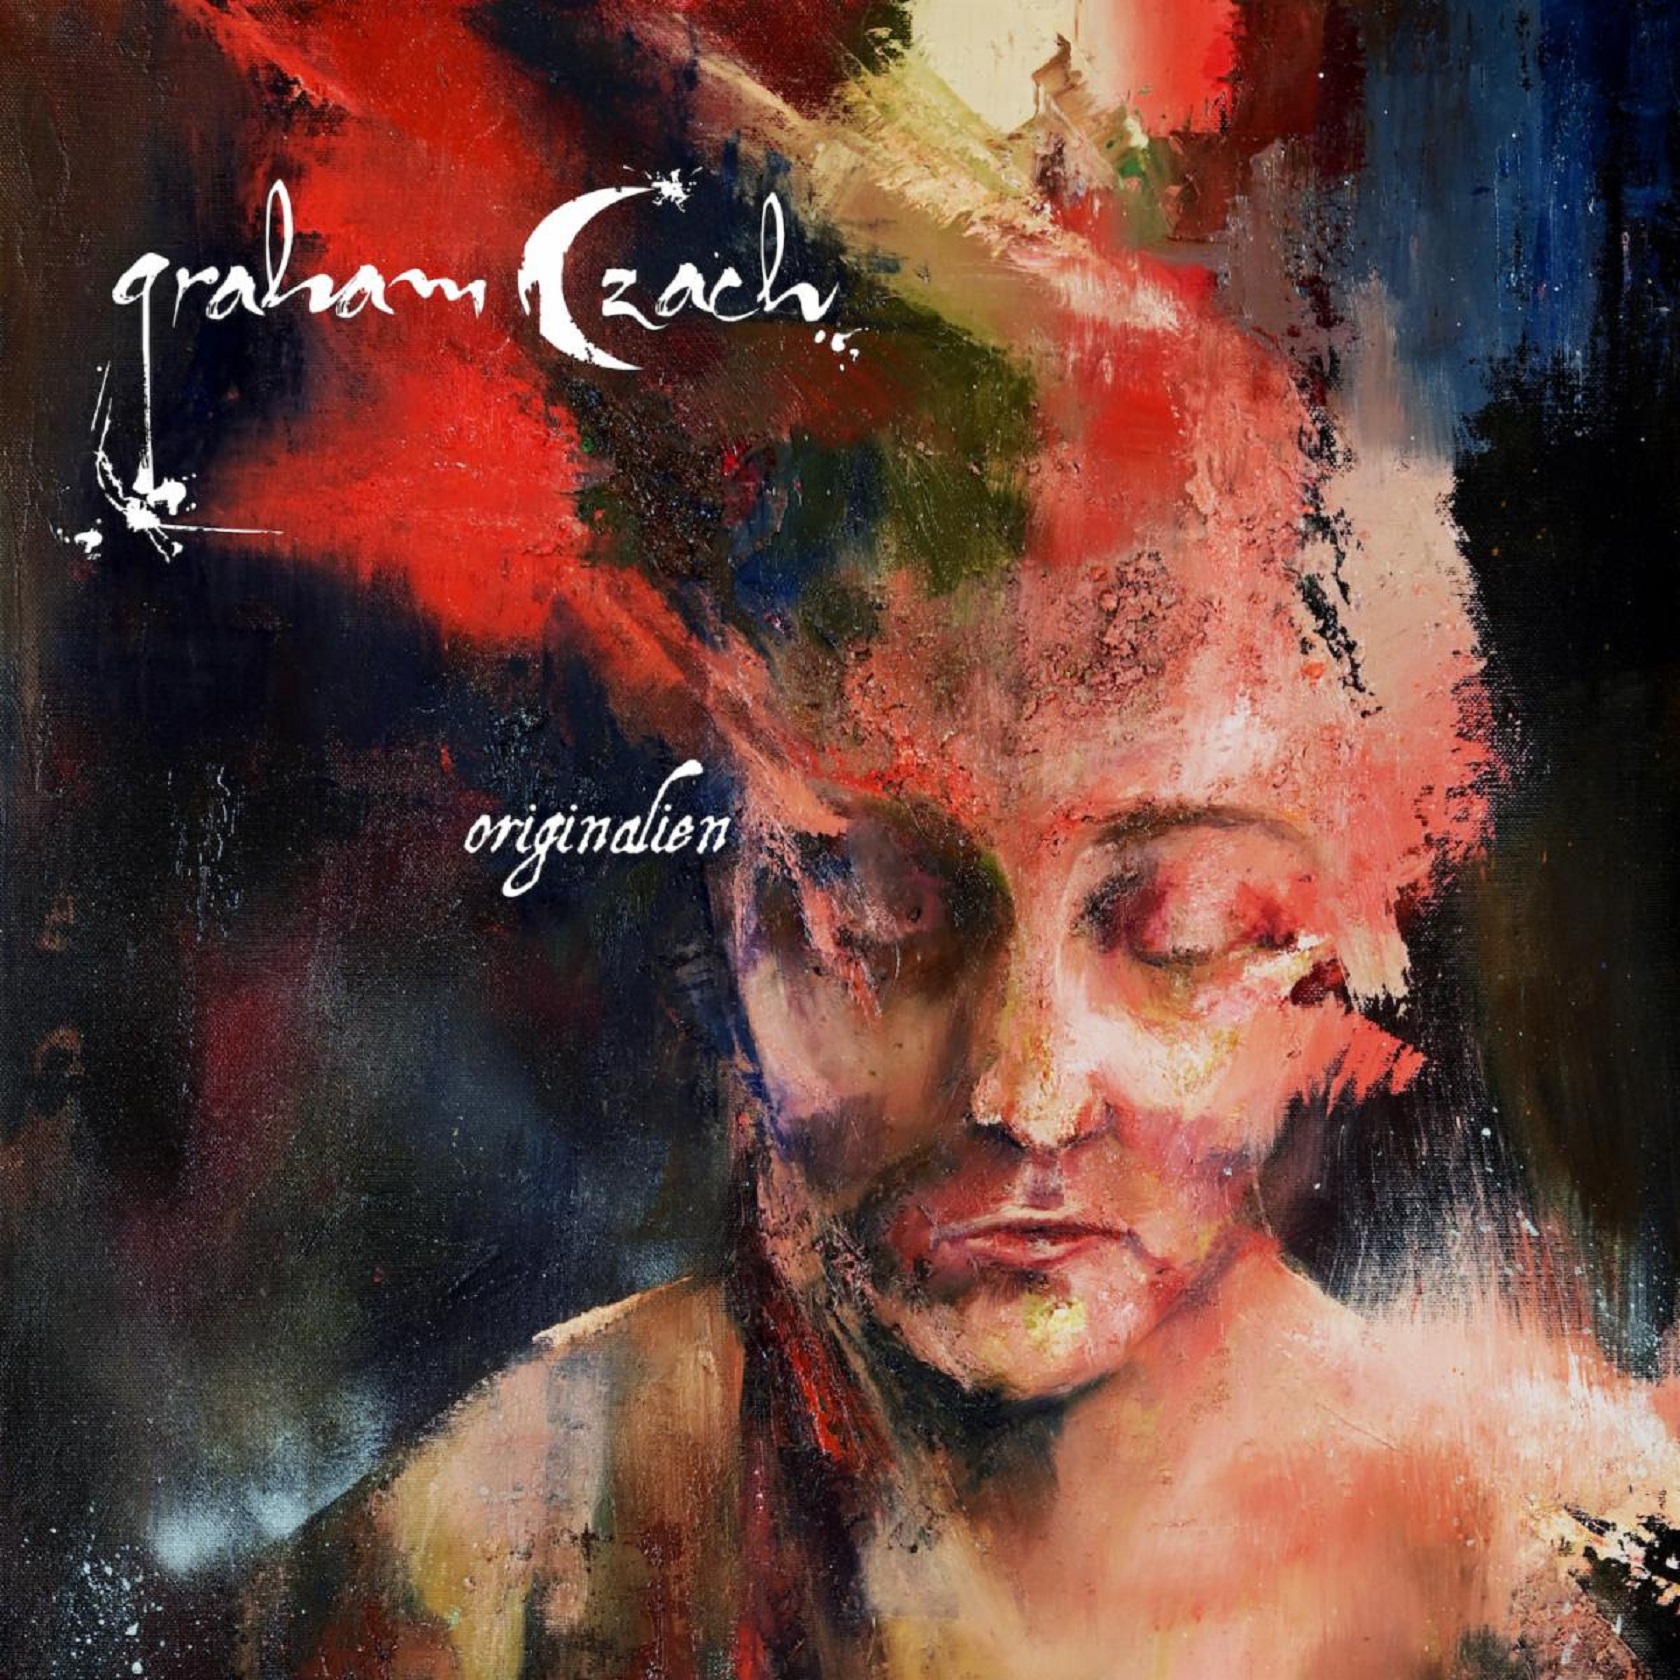 Graham Czach shares lush, genre-blending concept album 'Originalien' via Ropeadope